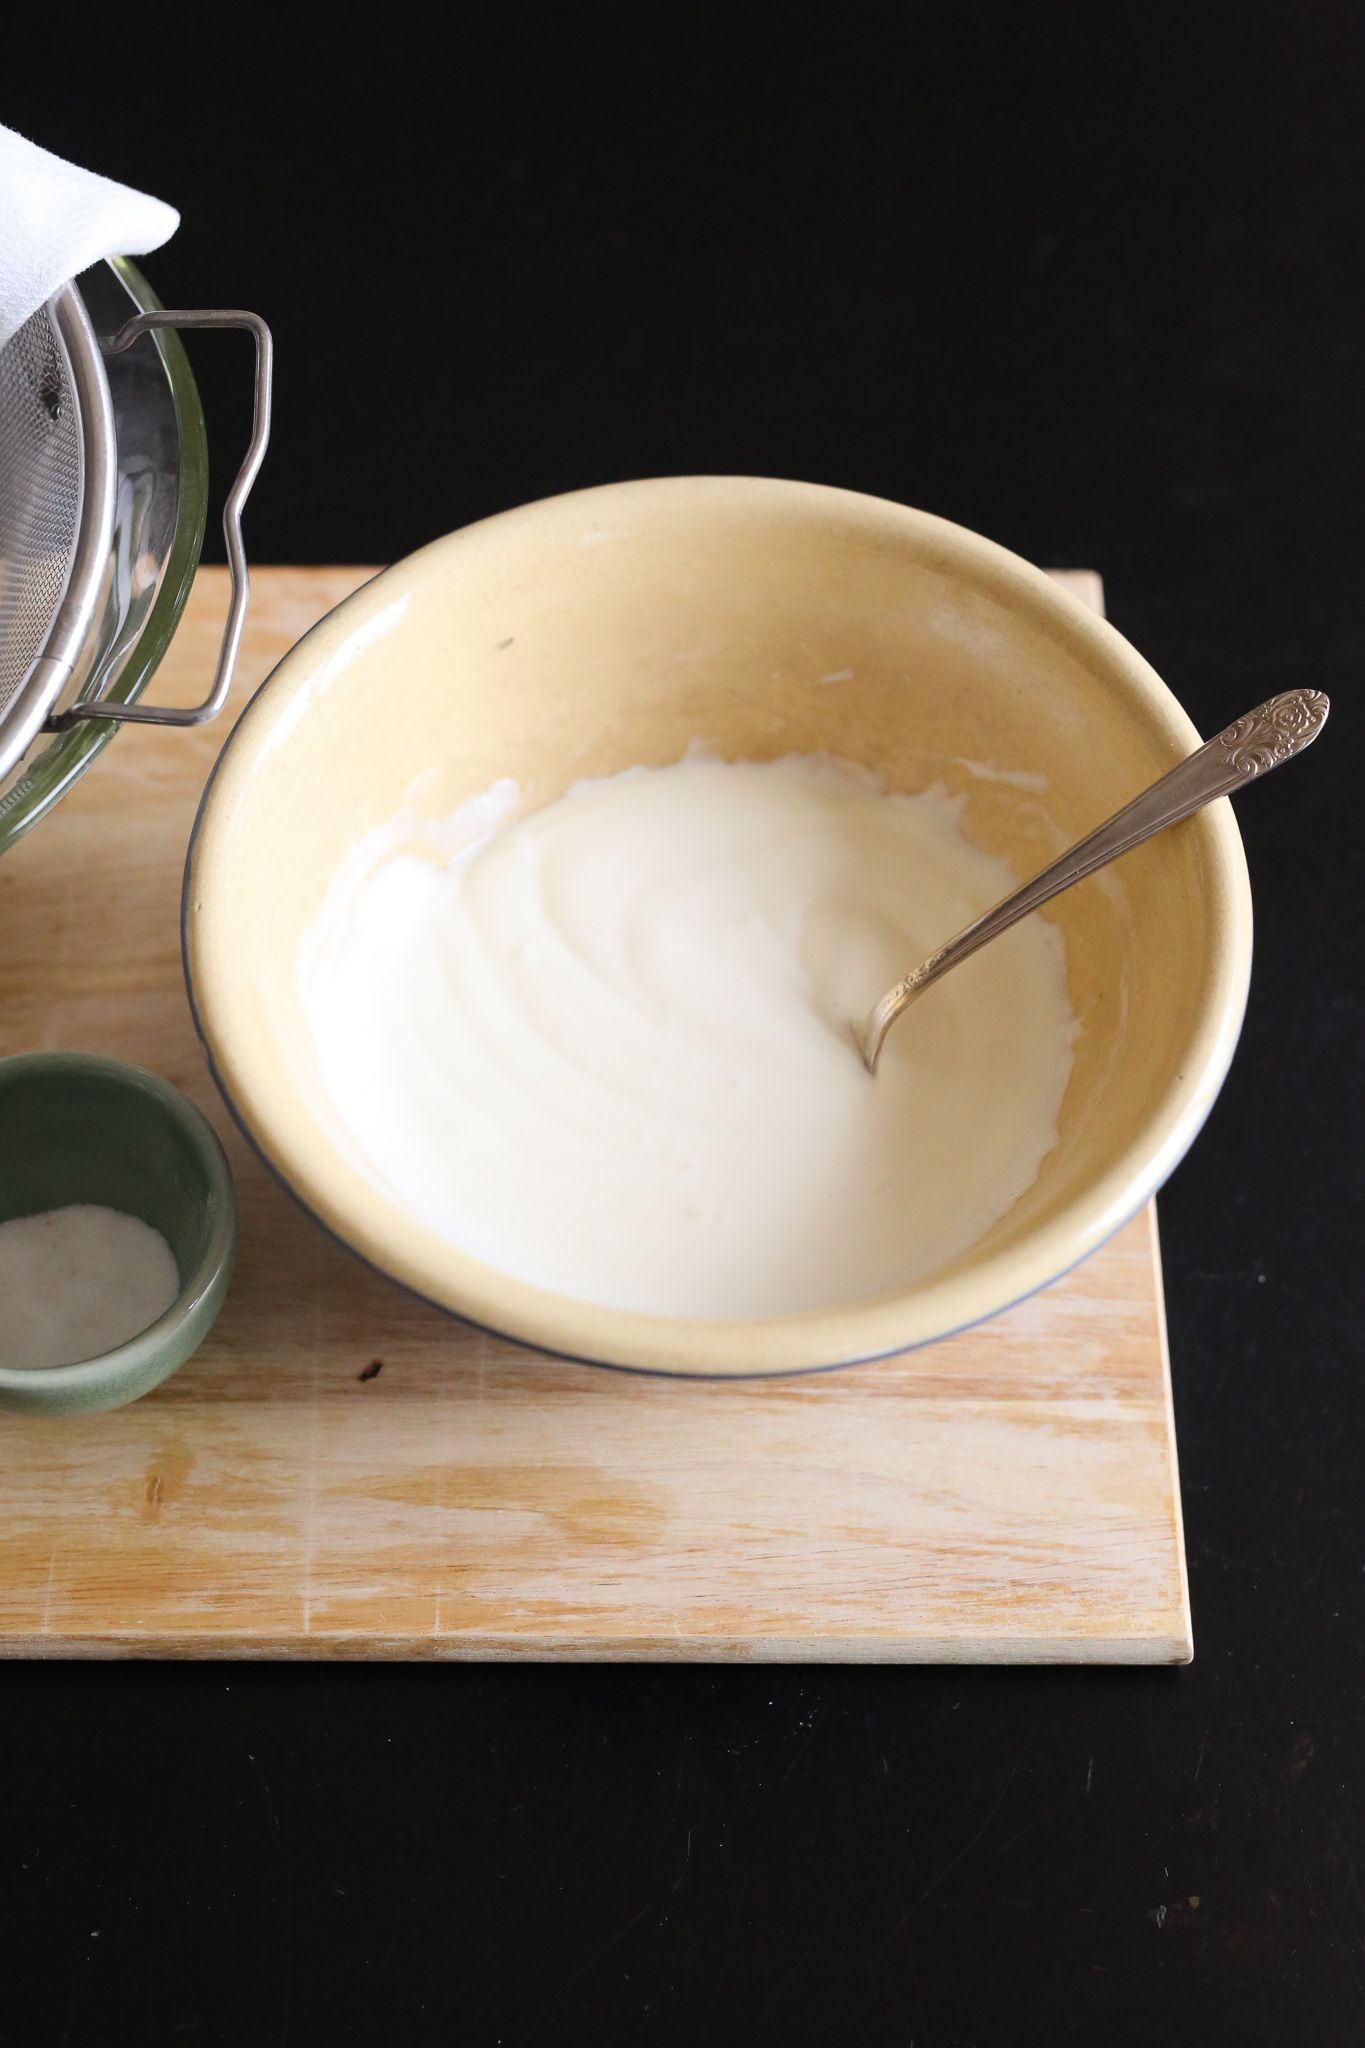 bowl of yogurt with silver spoon on cutting board sitting on black table